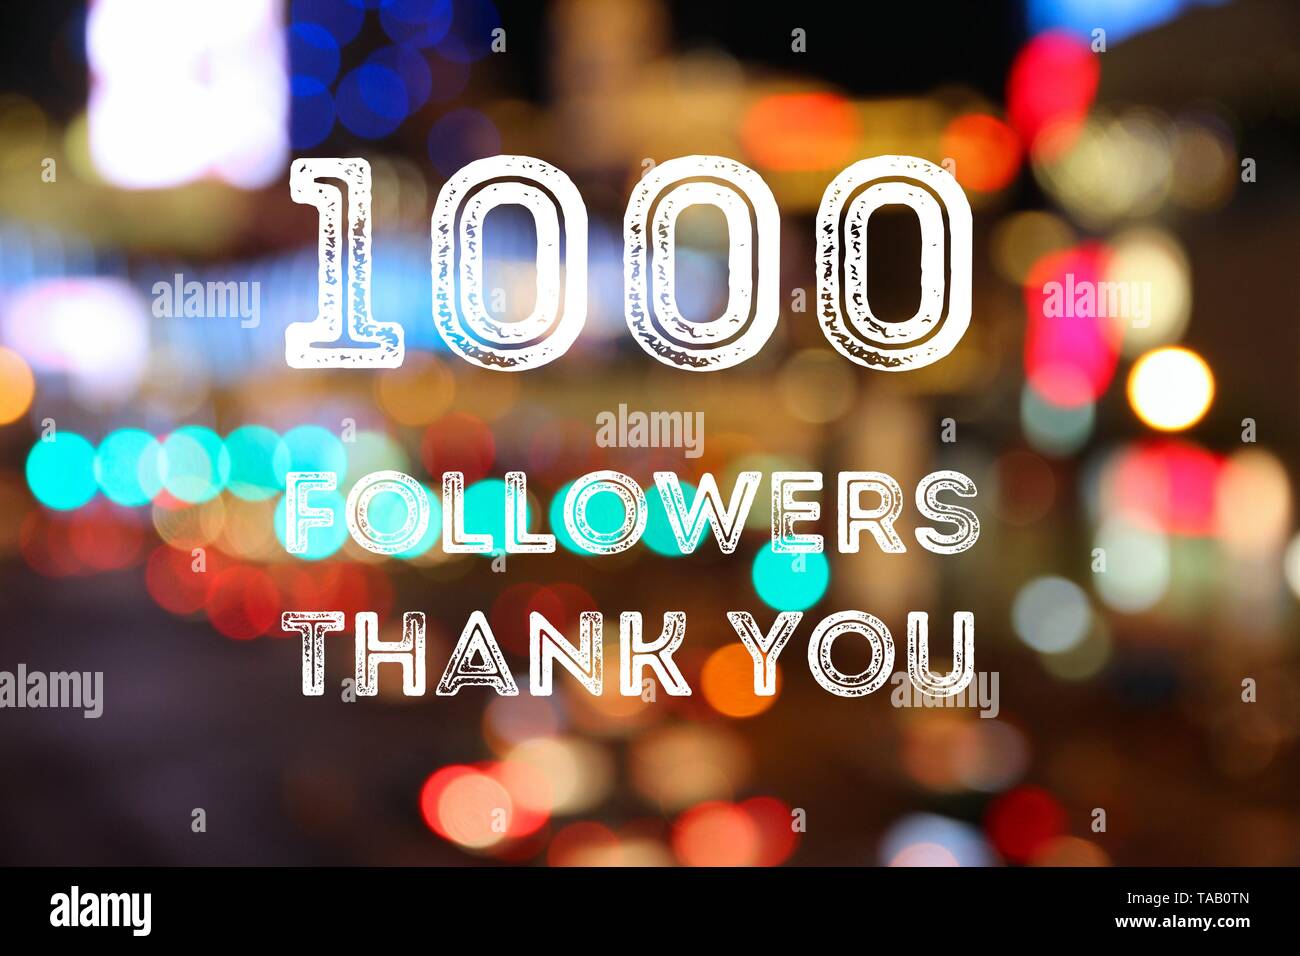 1000 followers - social media milestone achievement. Online community thank you note. 1000 likes. Stock Photo